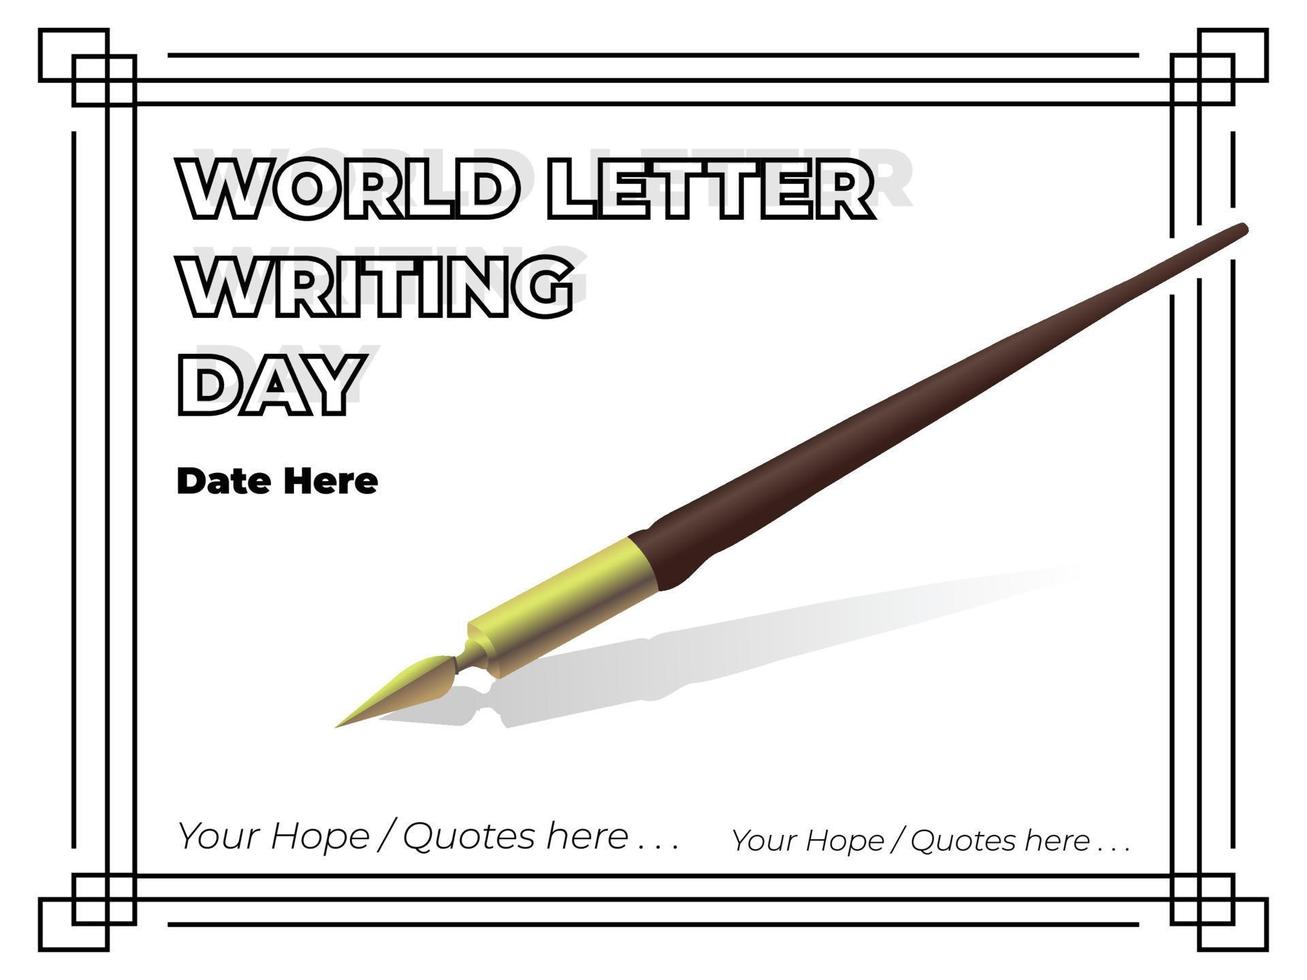 World letter writing day design template, pen vector